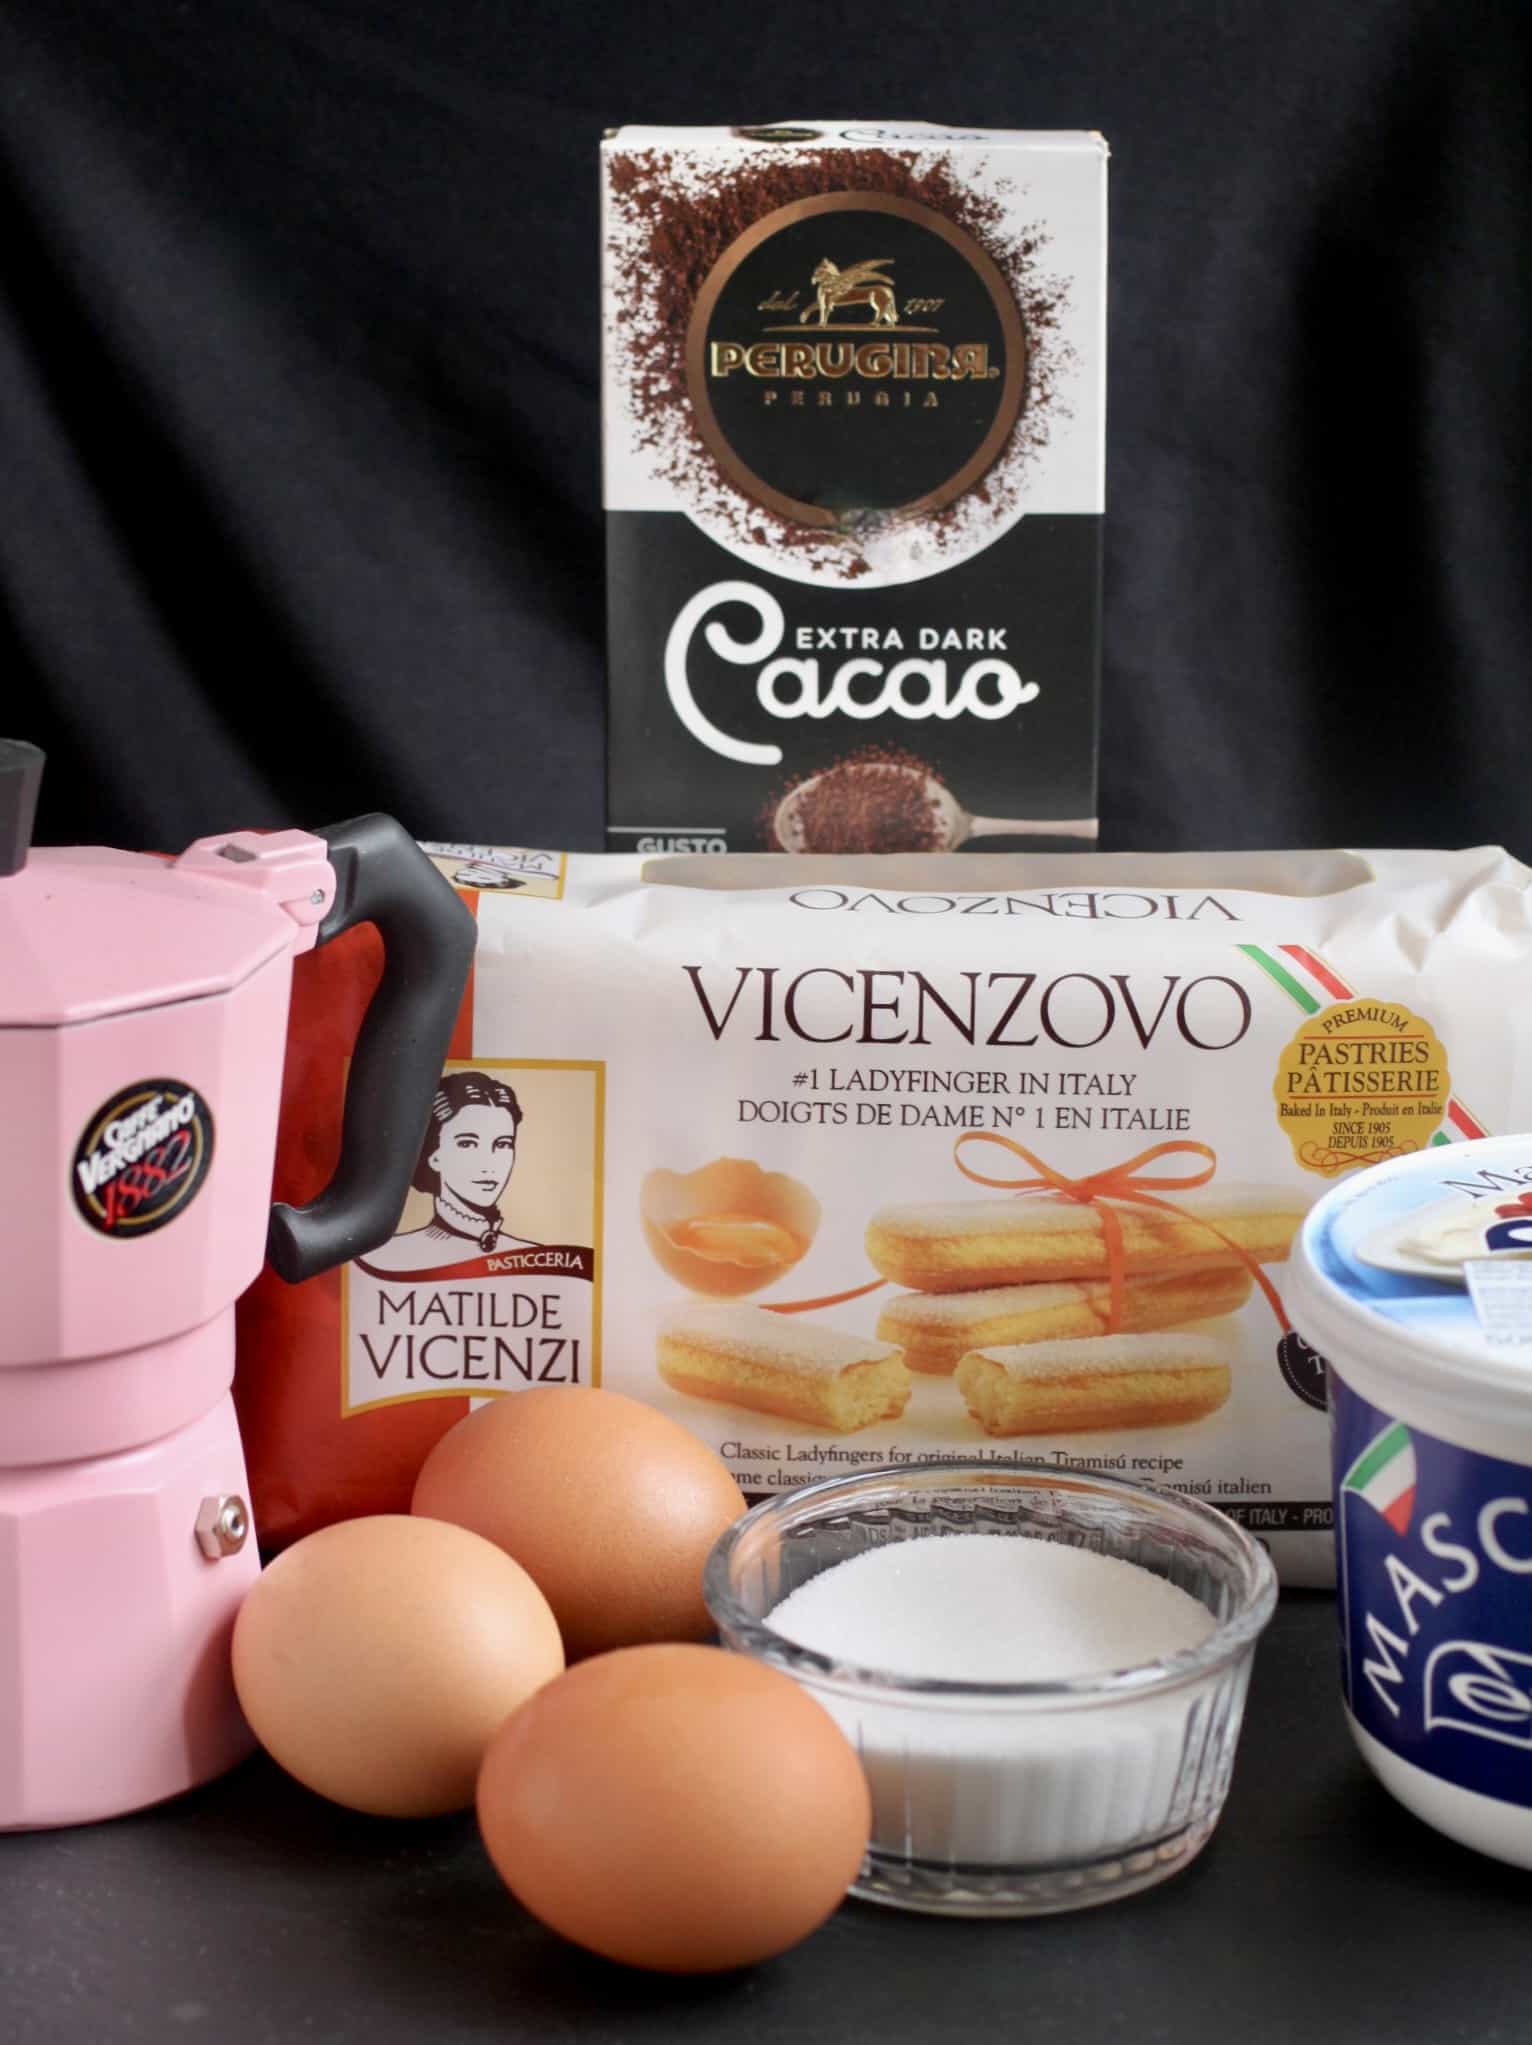 ingredients to make original tiramisu: Savoiardi biscuits, eggs, coffee, mascarpone, sugar and cocoa.